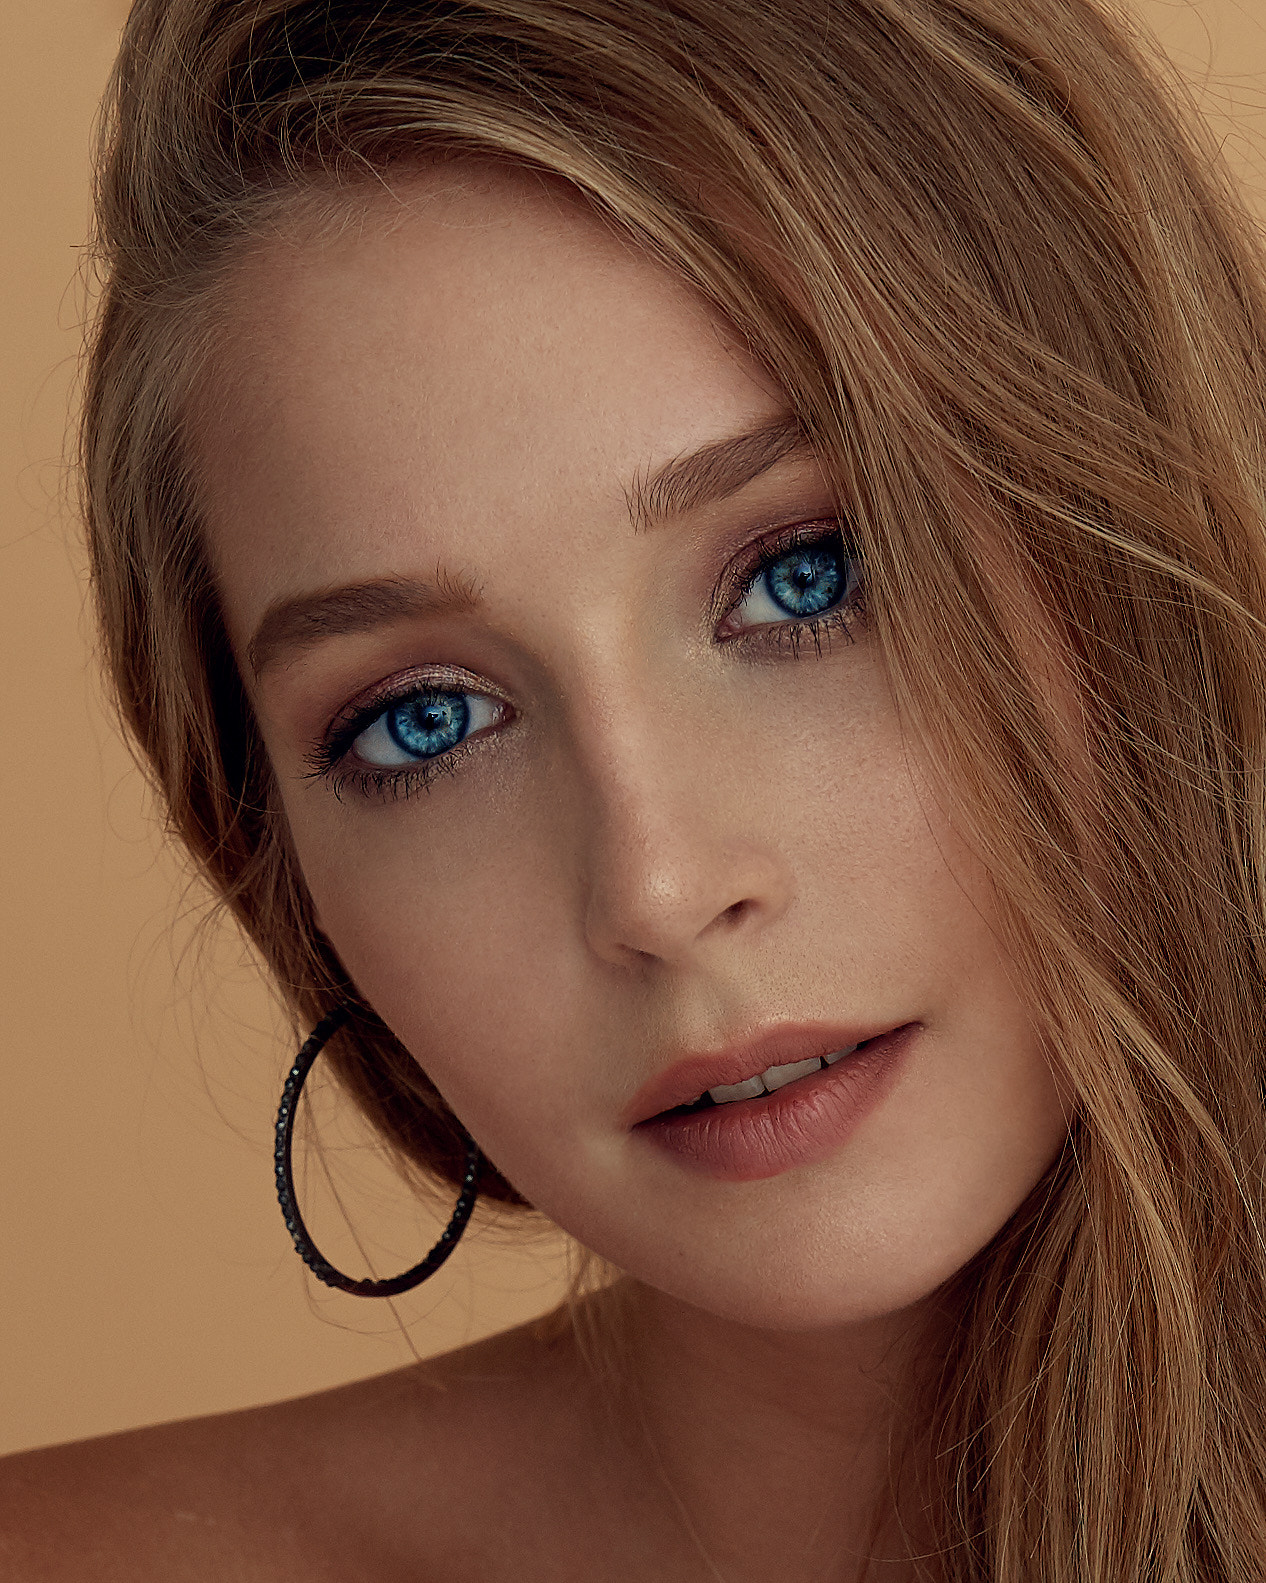 Mikhail Bazarov Women Blonde Long Hair Makeup Eyeliner Blue Eyes Looking At Viewer Jewelry Earring H 1266x1583